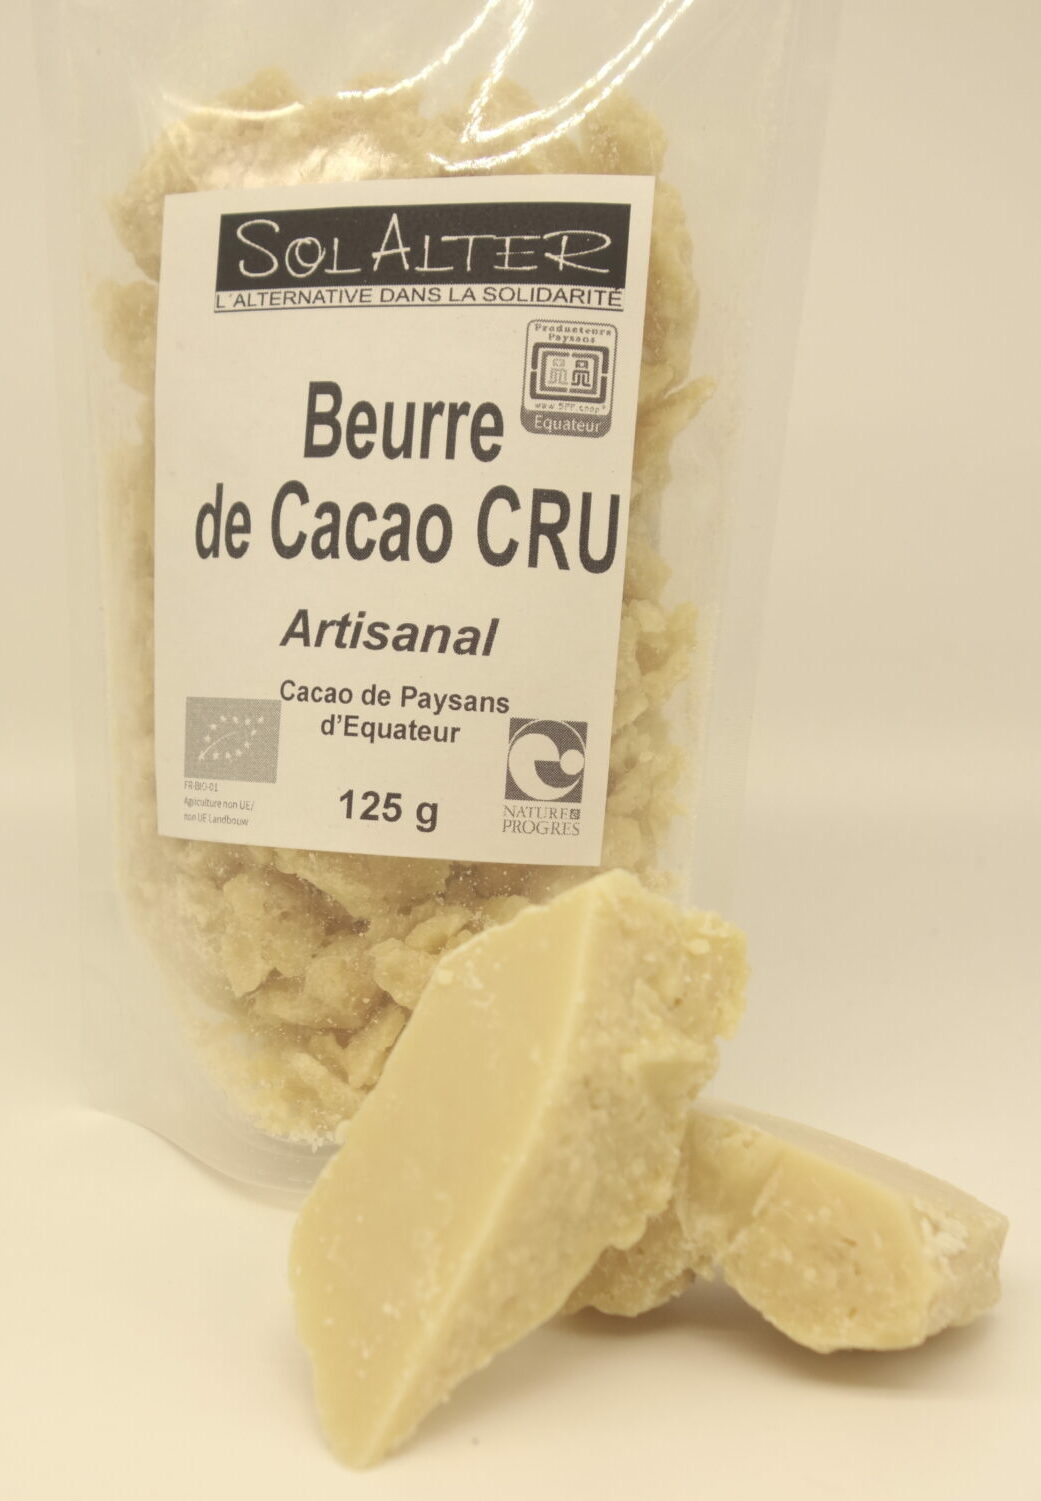 Beurre de cacao cru artisanal - Solalter